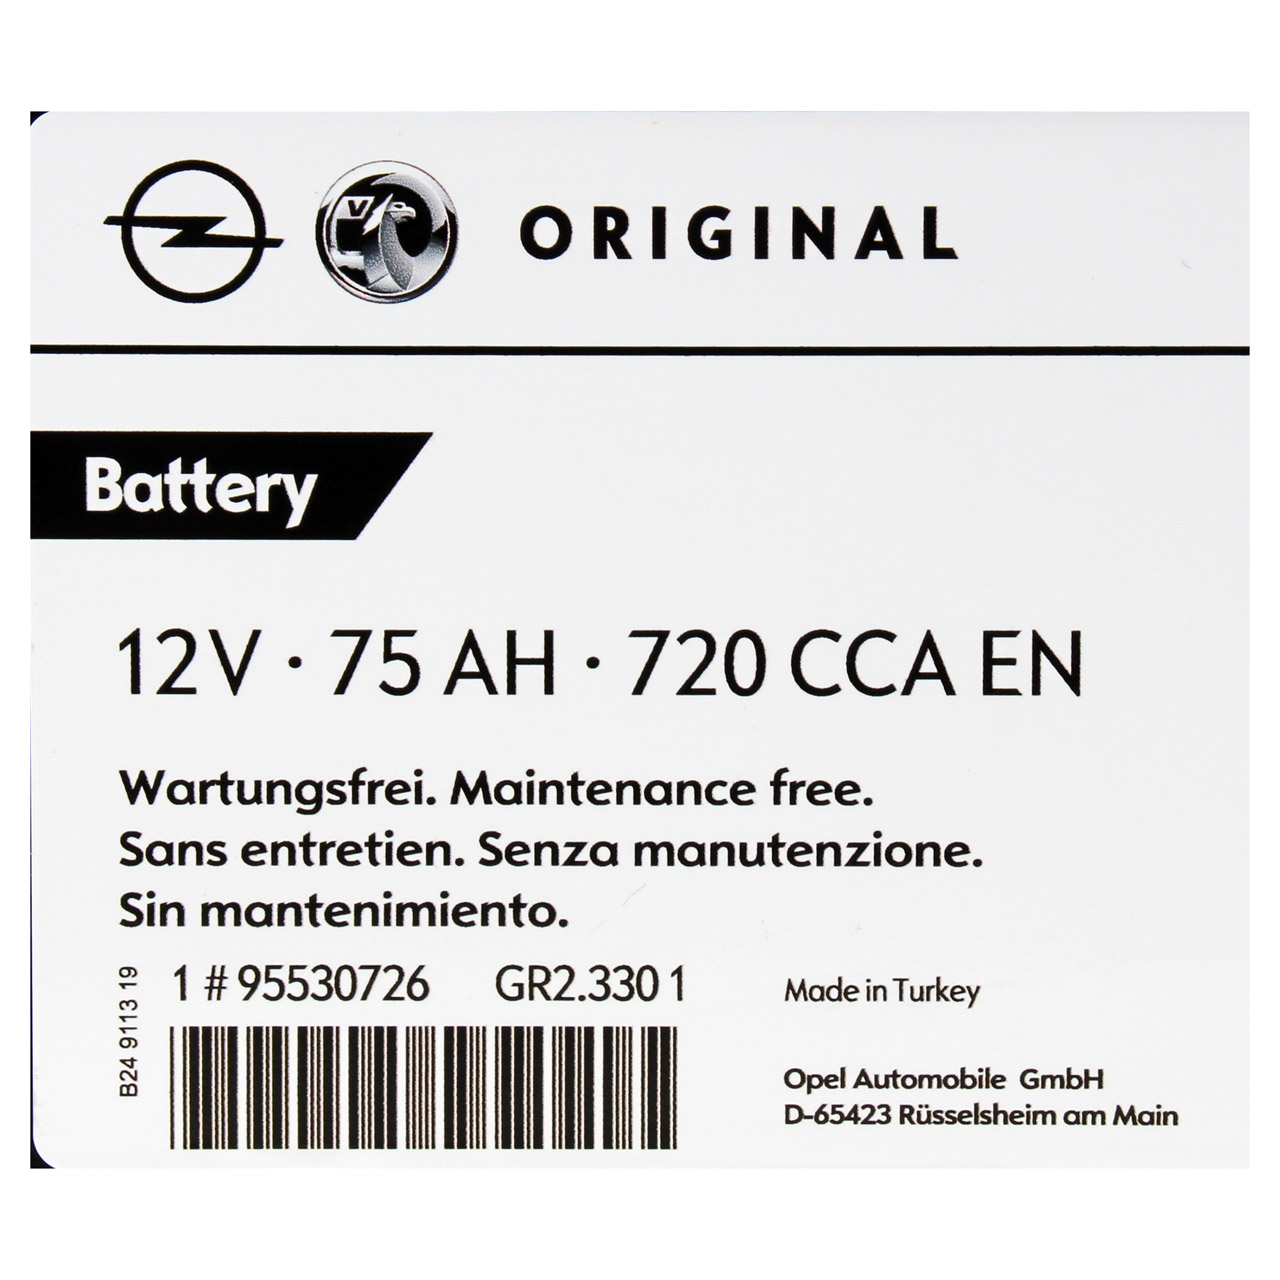 ORIGINAL GM Opel Autobatterie Starterbatterie 12V 70Ah 750 CCA EN